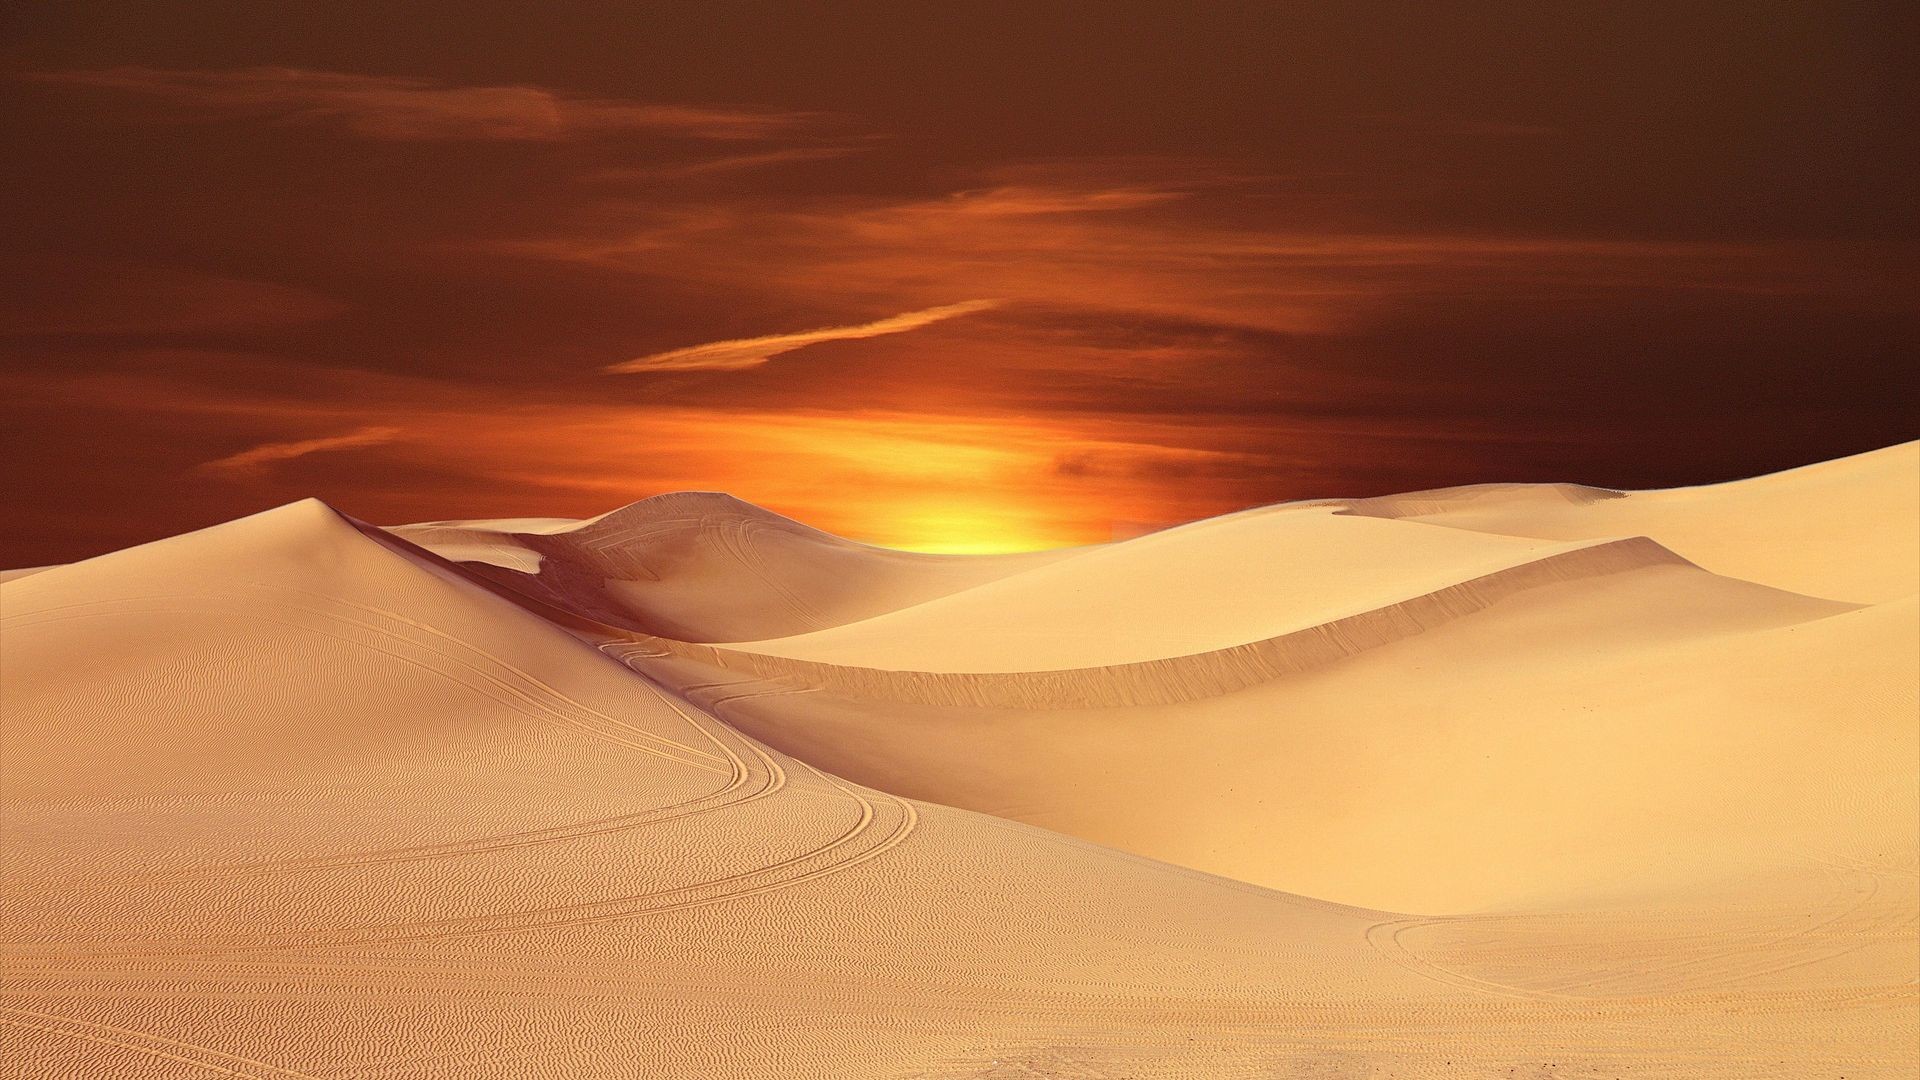 1920x1080 Awesome Sunset Desert Sand Dune HD Wallpaper (px)